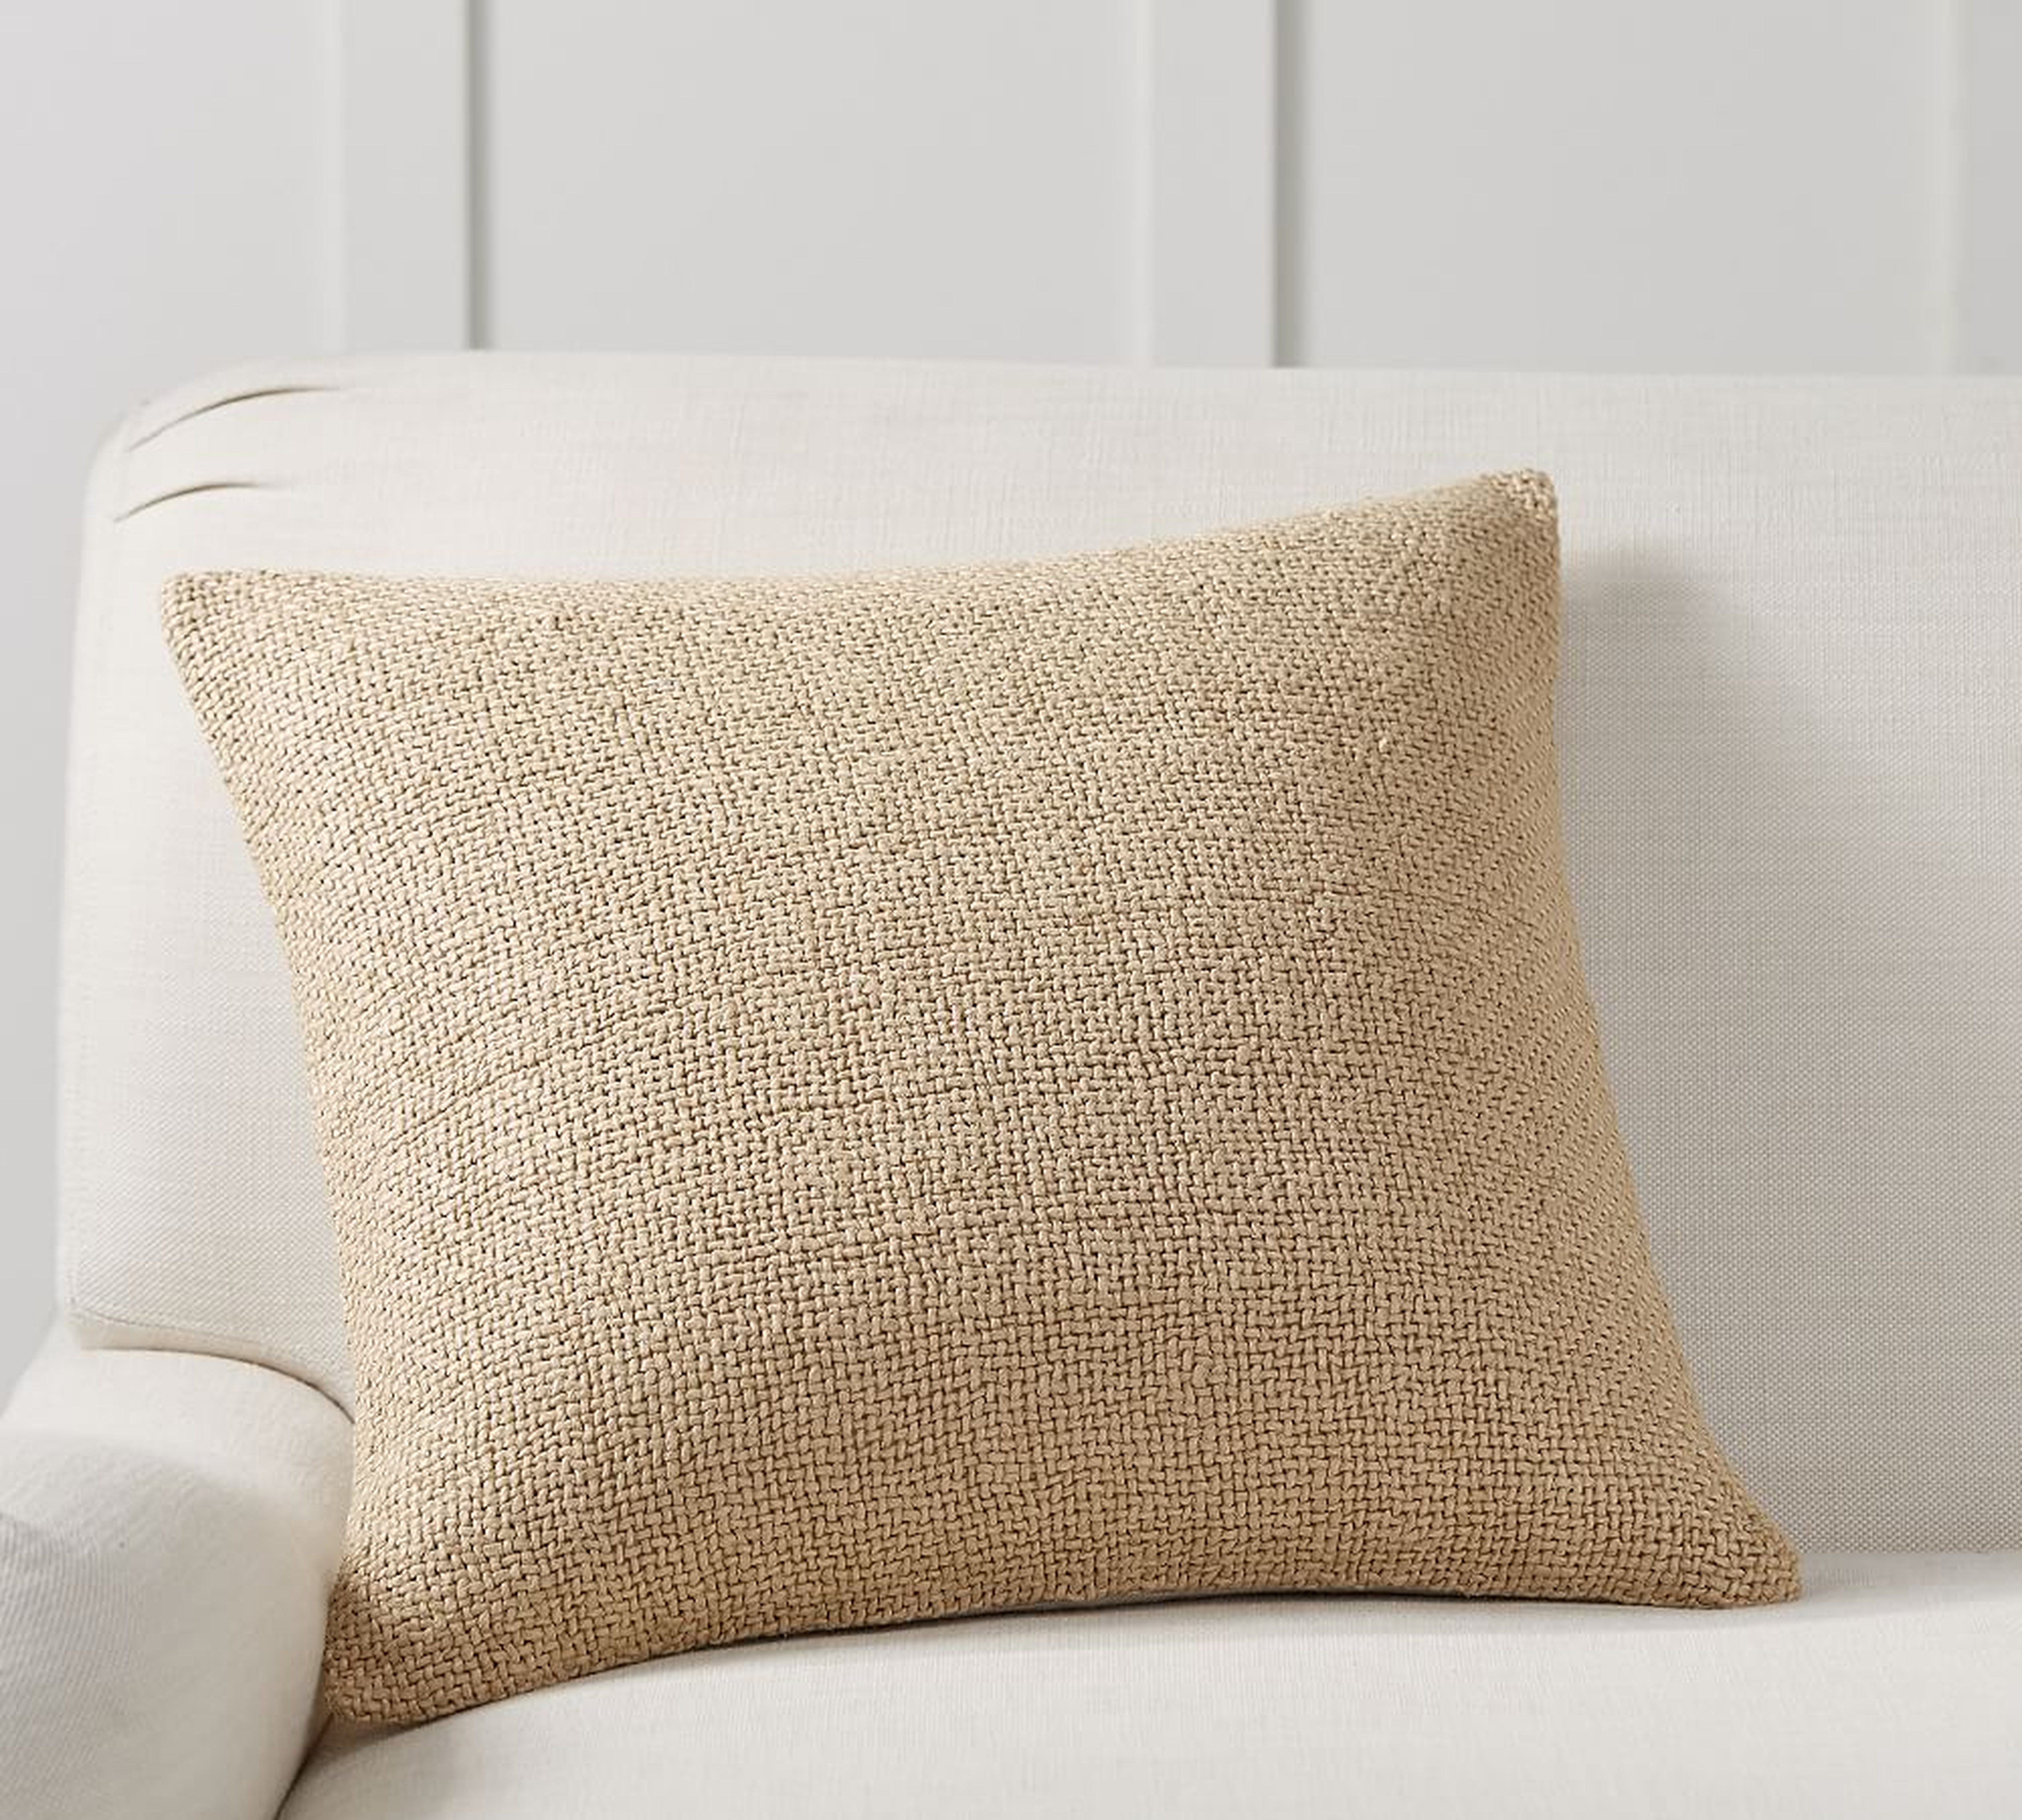 Faye Textured Linen Pillow Cover, 20 x 20", Camel - Pottery Barn